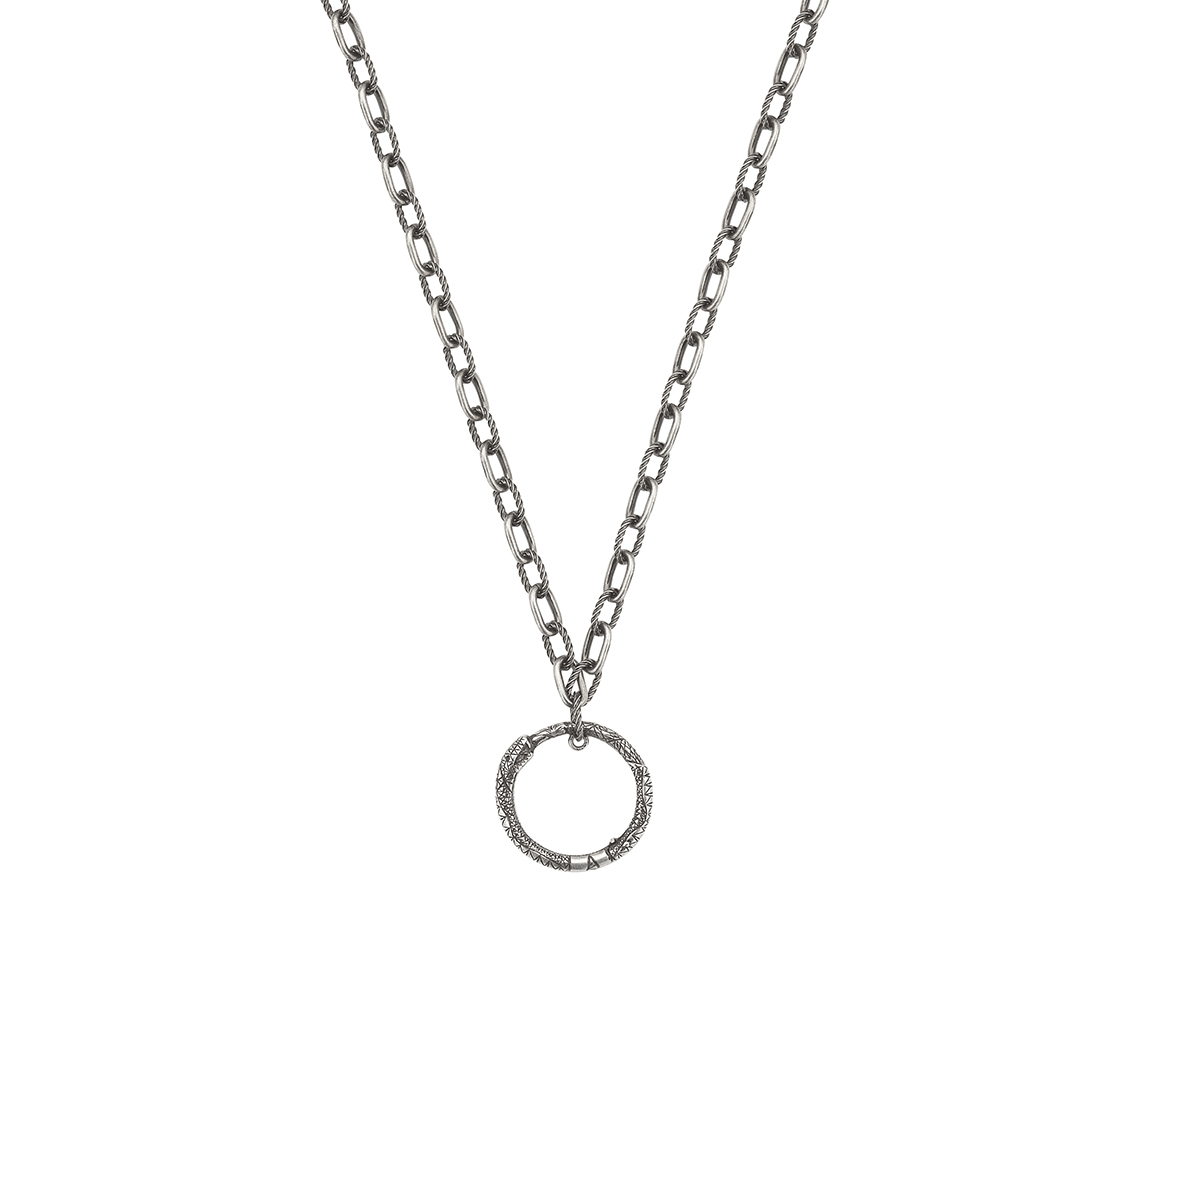 Gucci Ouroboros pendant necklace 60cm | Joes Jewelry St Maarten